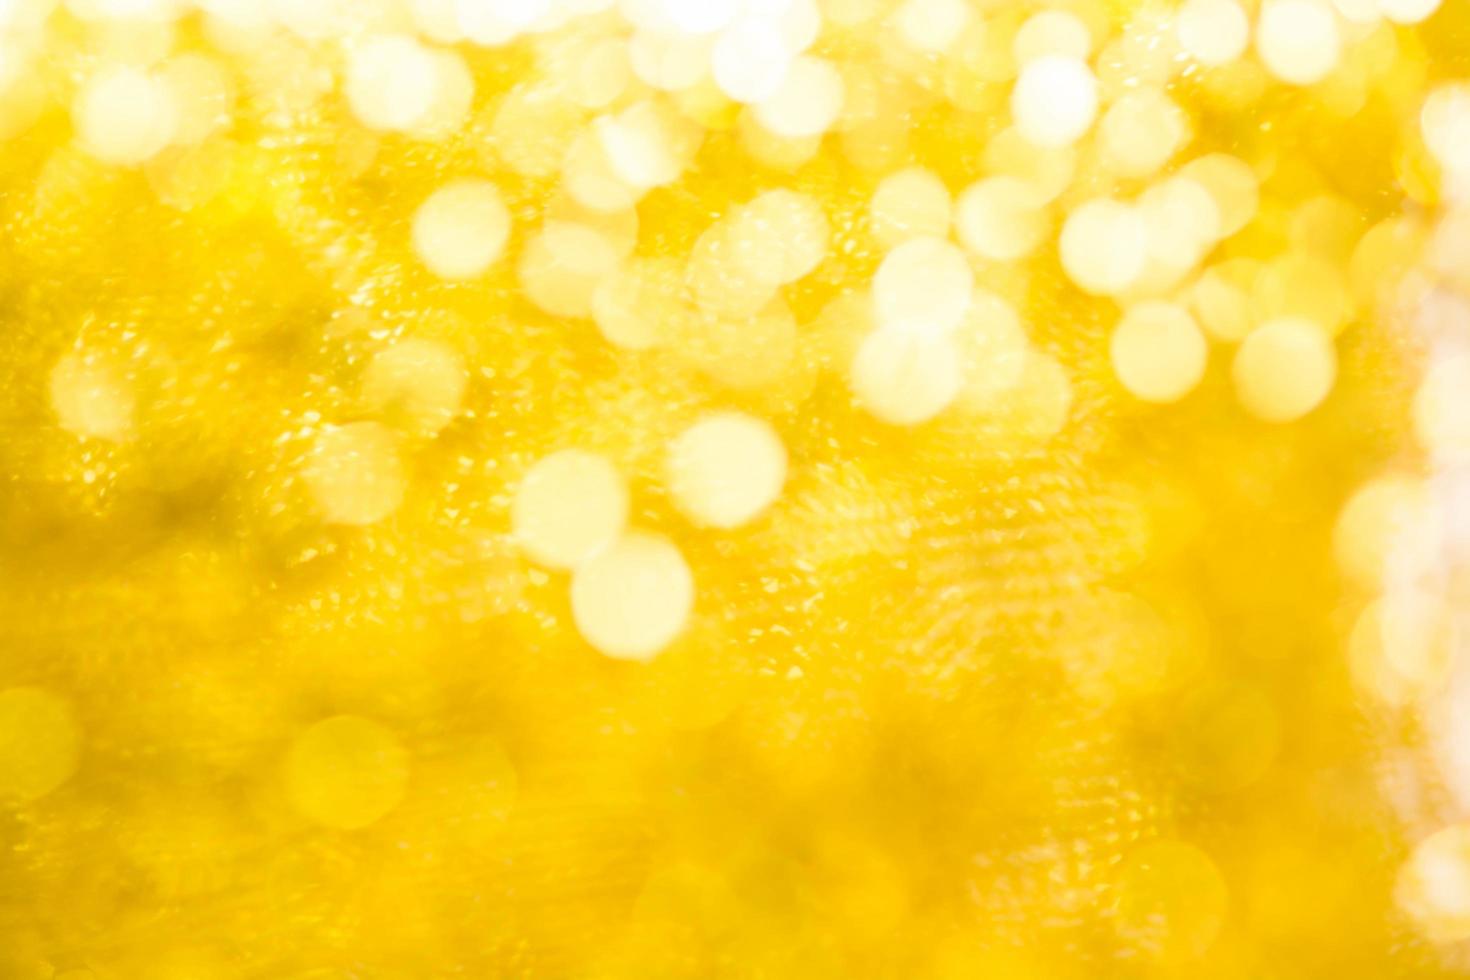 gouden lente of zomer, kerst glinsterende background.holiday abstracte textuur foto